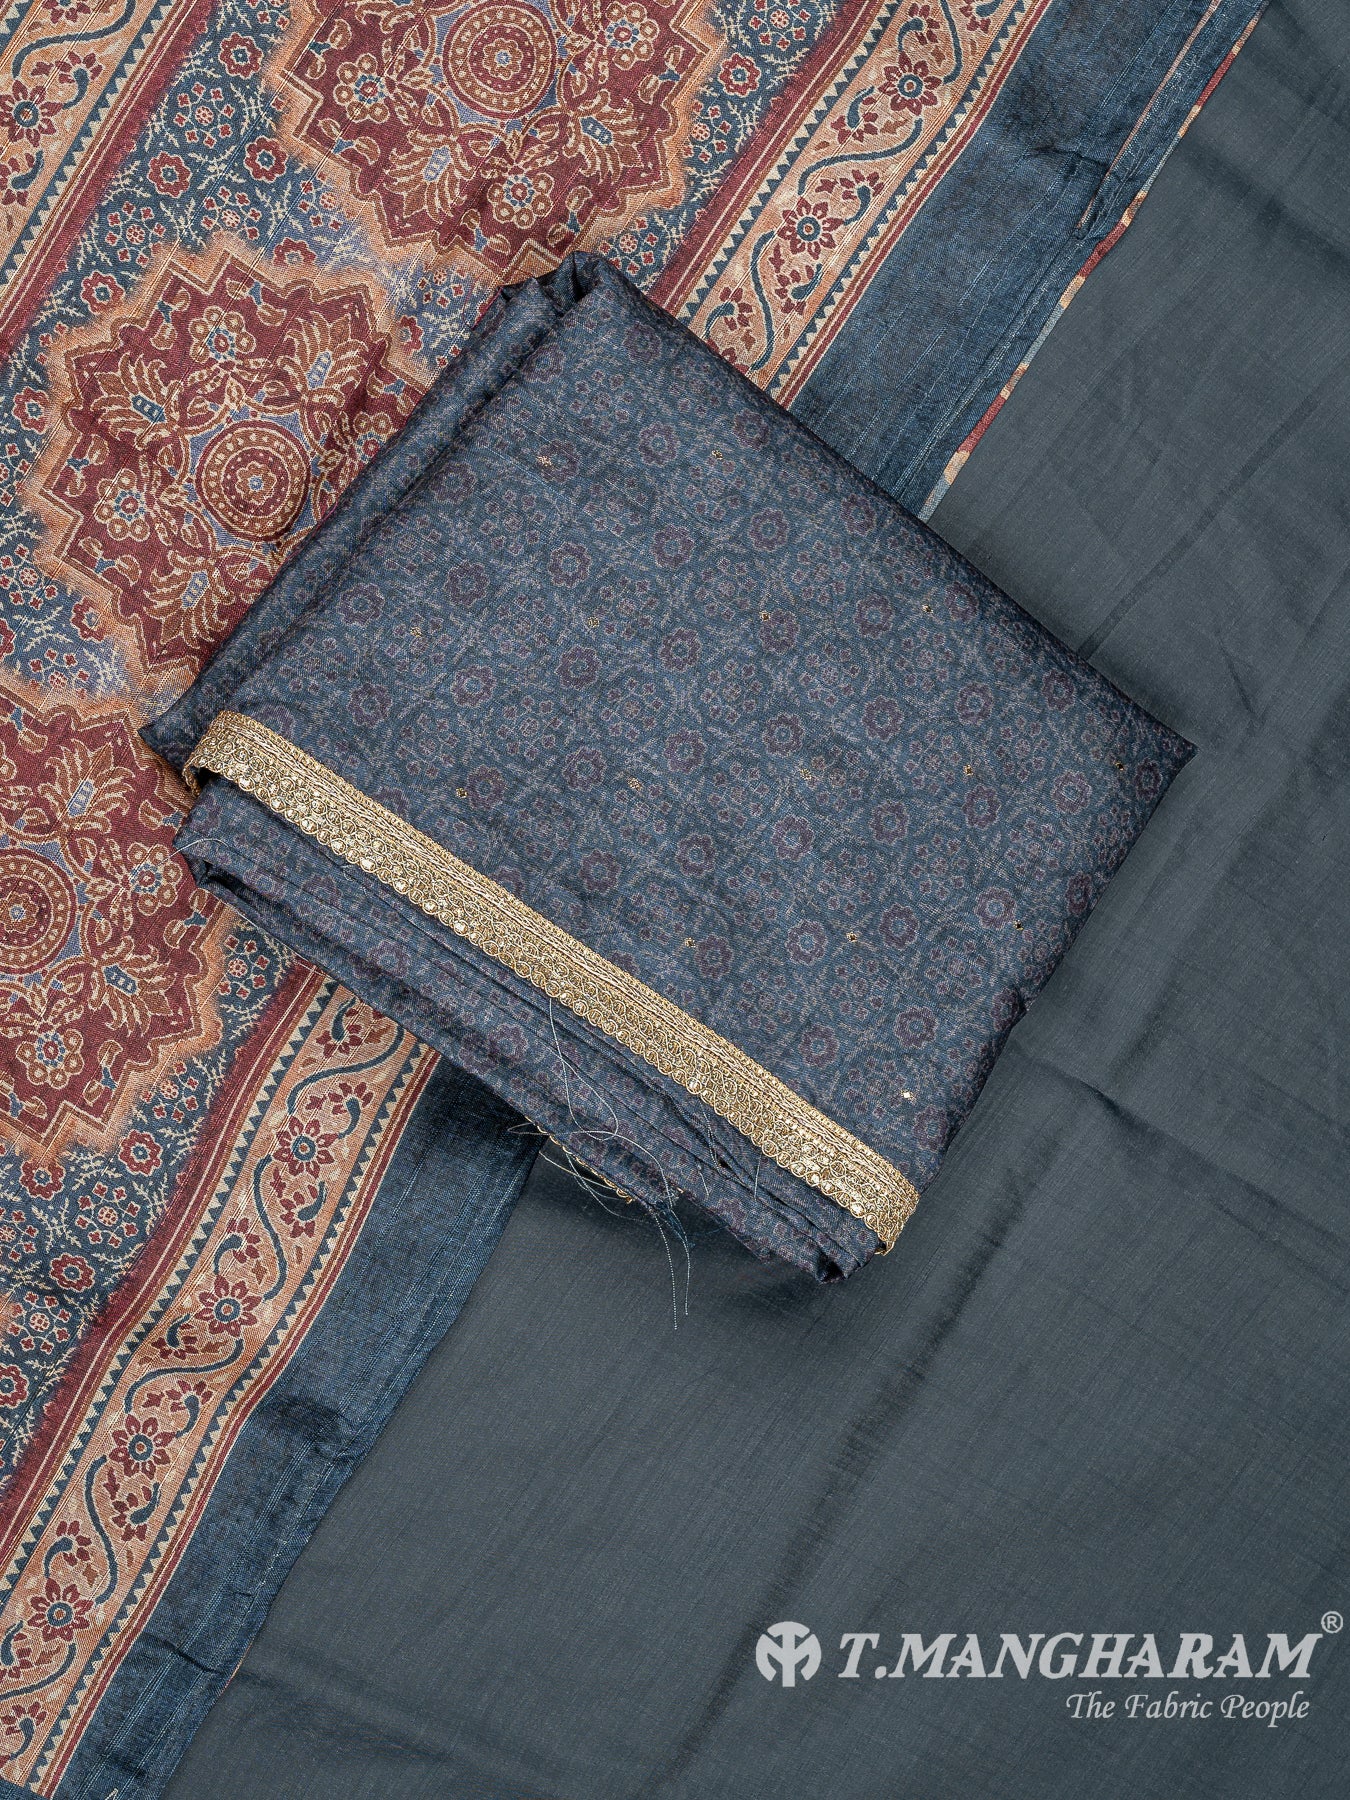 Multicolor Silk Cotton Chudidhar Fabric Set - EG1838 view-1